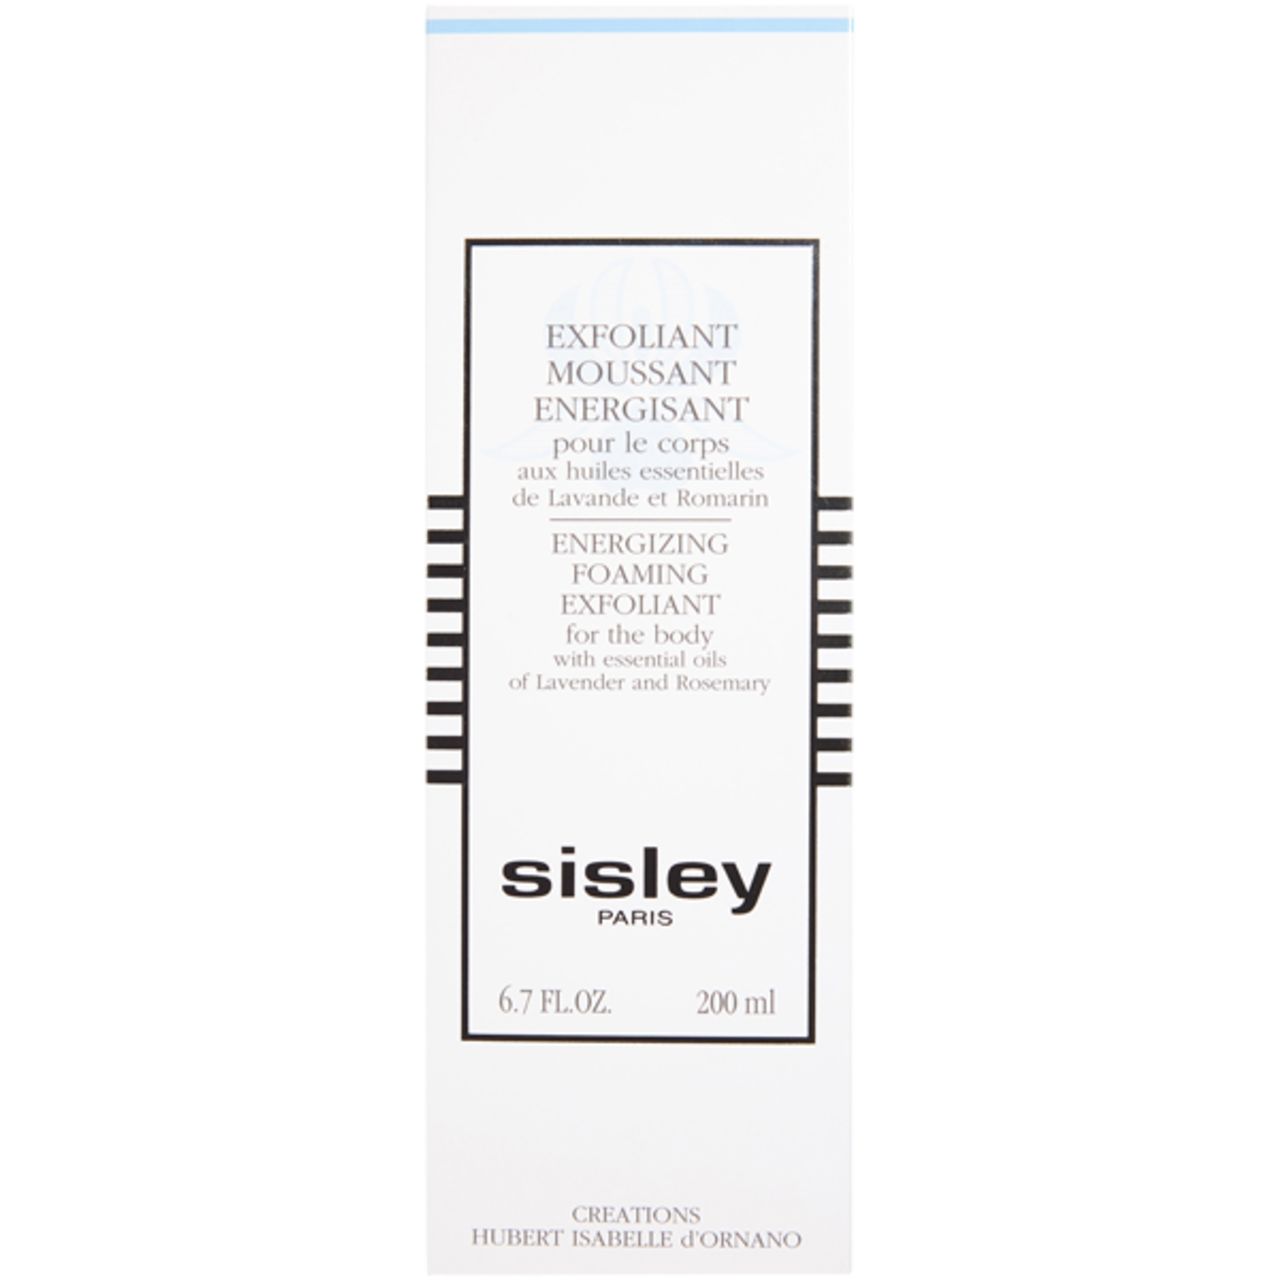 Sisley, Exfoliant Moussant Energisant